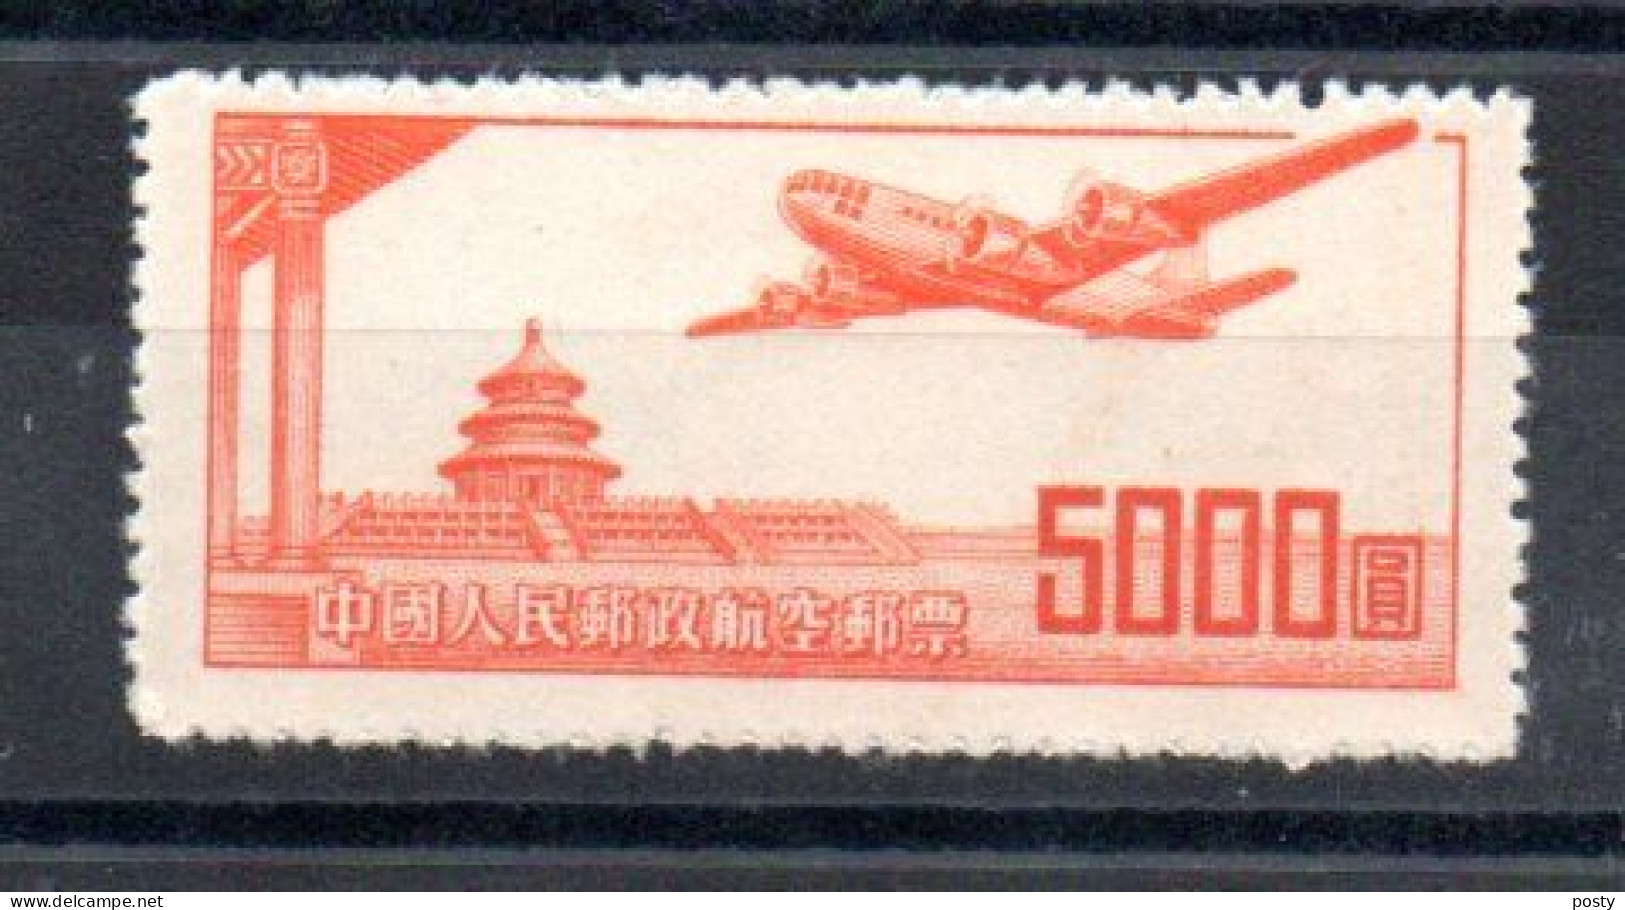 CHINE - CHINA - 1951 - POSTE AERIENNE - AIRMAIL - AVION - AIRCRAFT - TEMPLE DU CIEL - TEMPLE OF HEAVEN - 5000 - - Luftpost